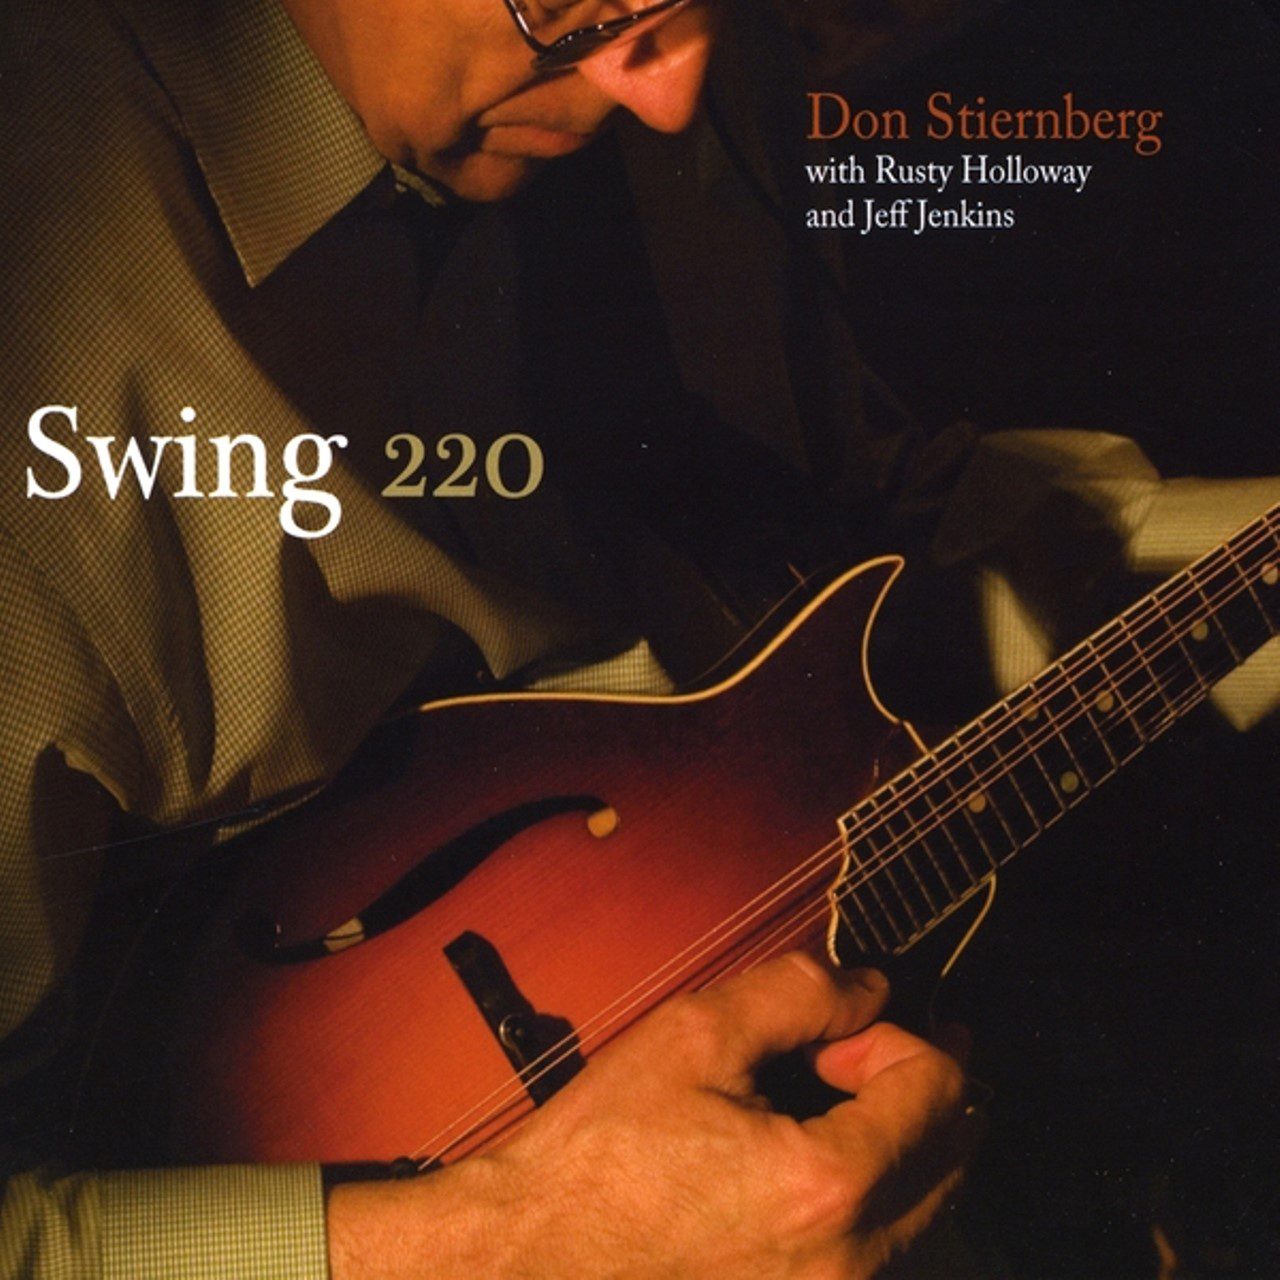 Don Stiernberg - Swing 220 cover album